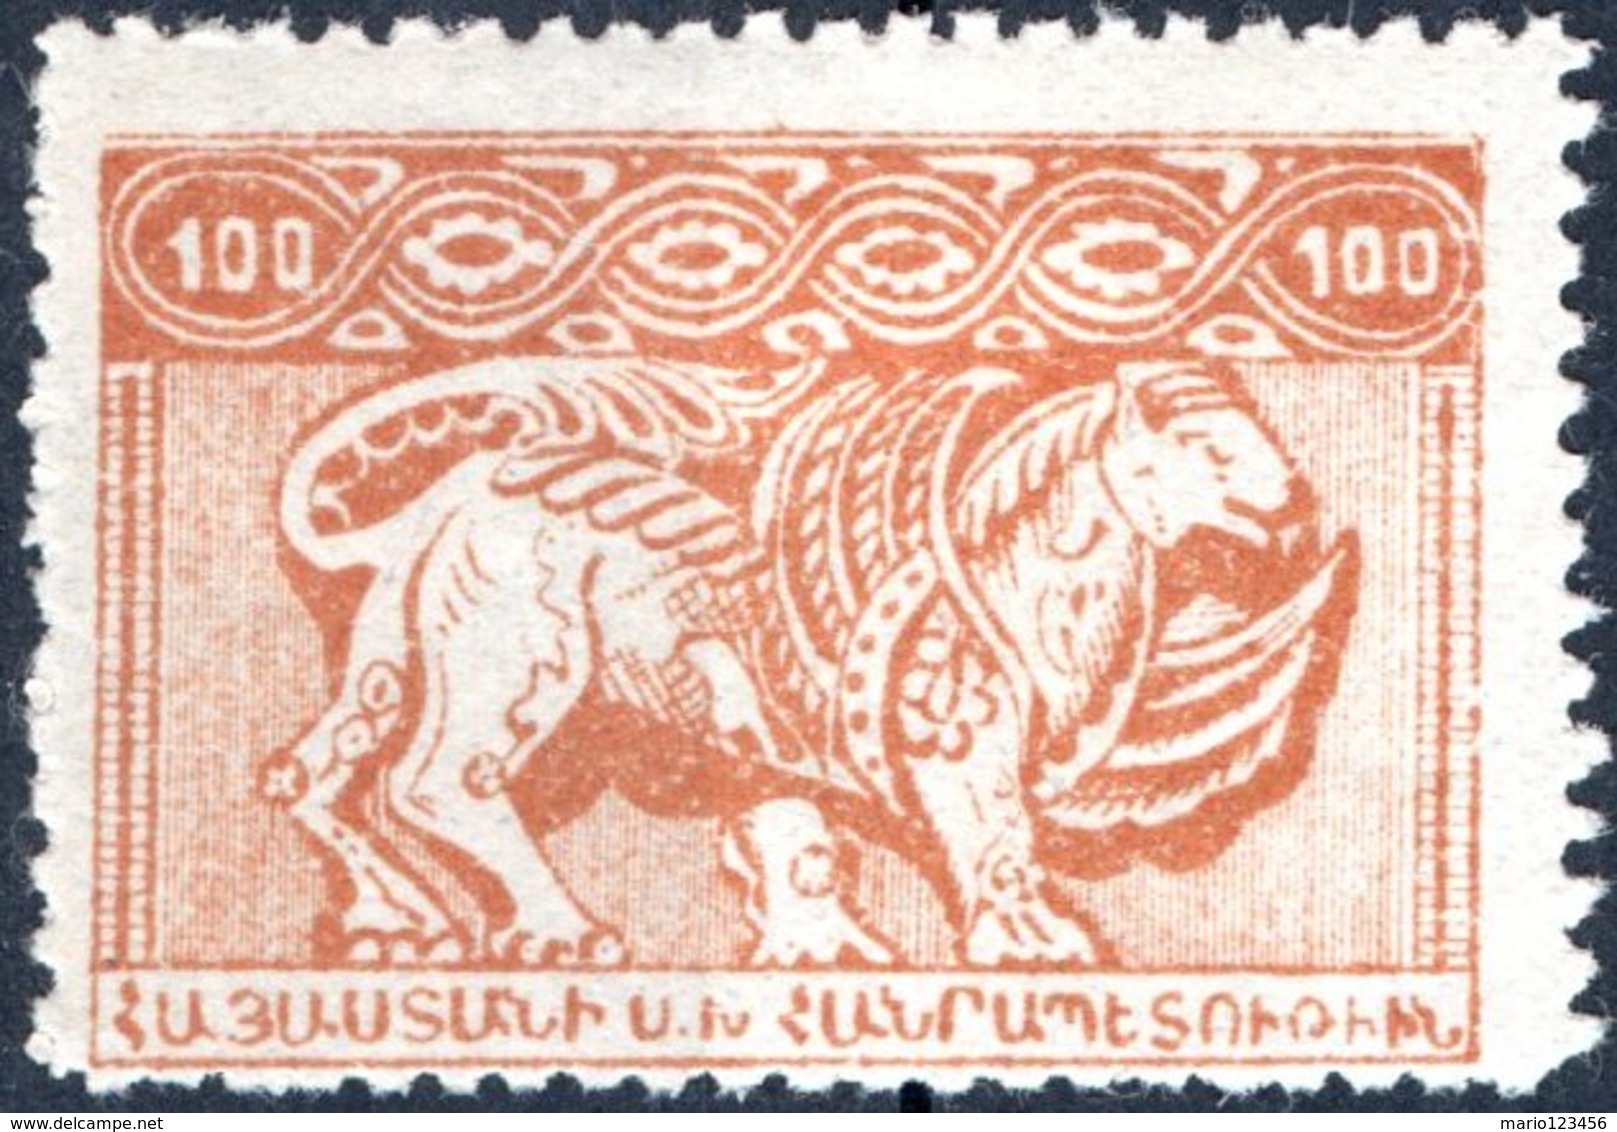 ARMENIA, SIMBOLI NAZIONALI, 1921, 100 R., FRANCOBOLLO NUOVO (MLH*)  Mi:AM IIgA, Scott:AM 284, Yt:AM 108 - Armenia